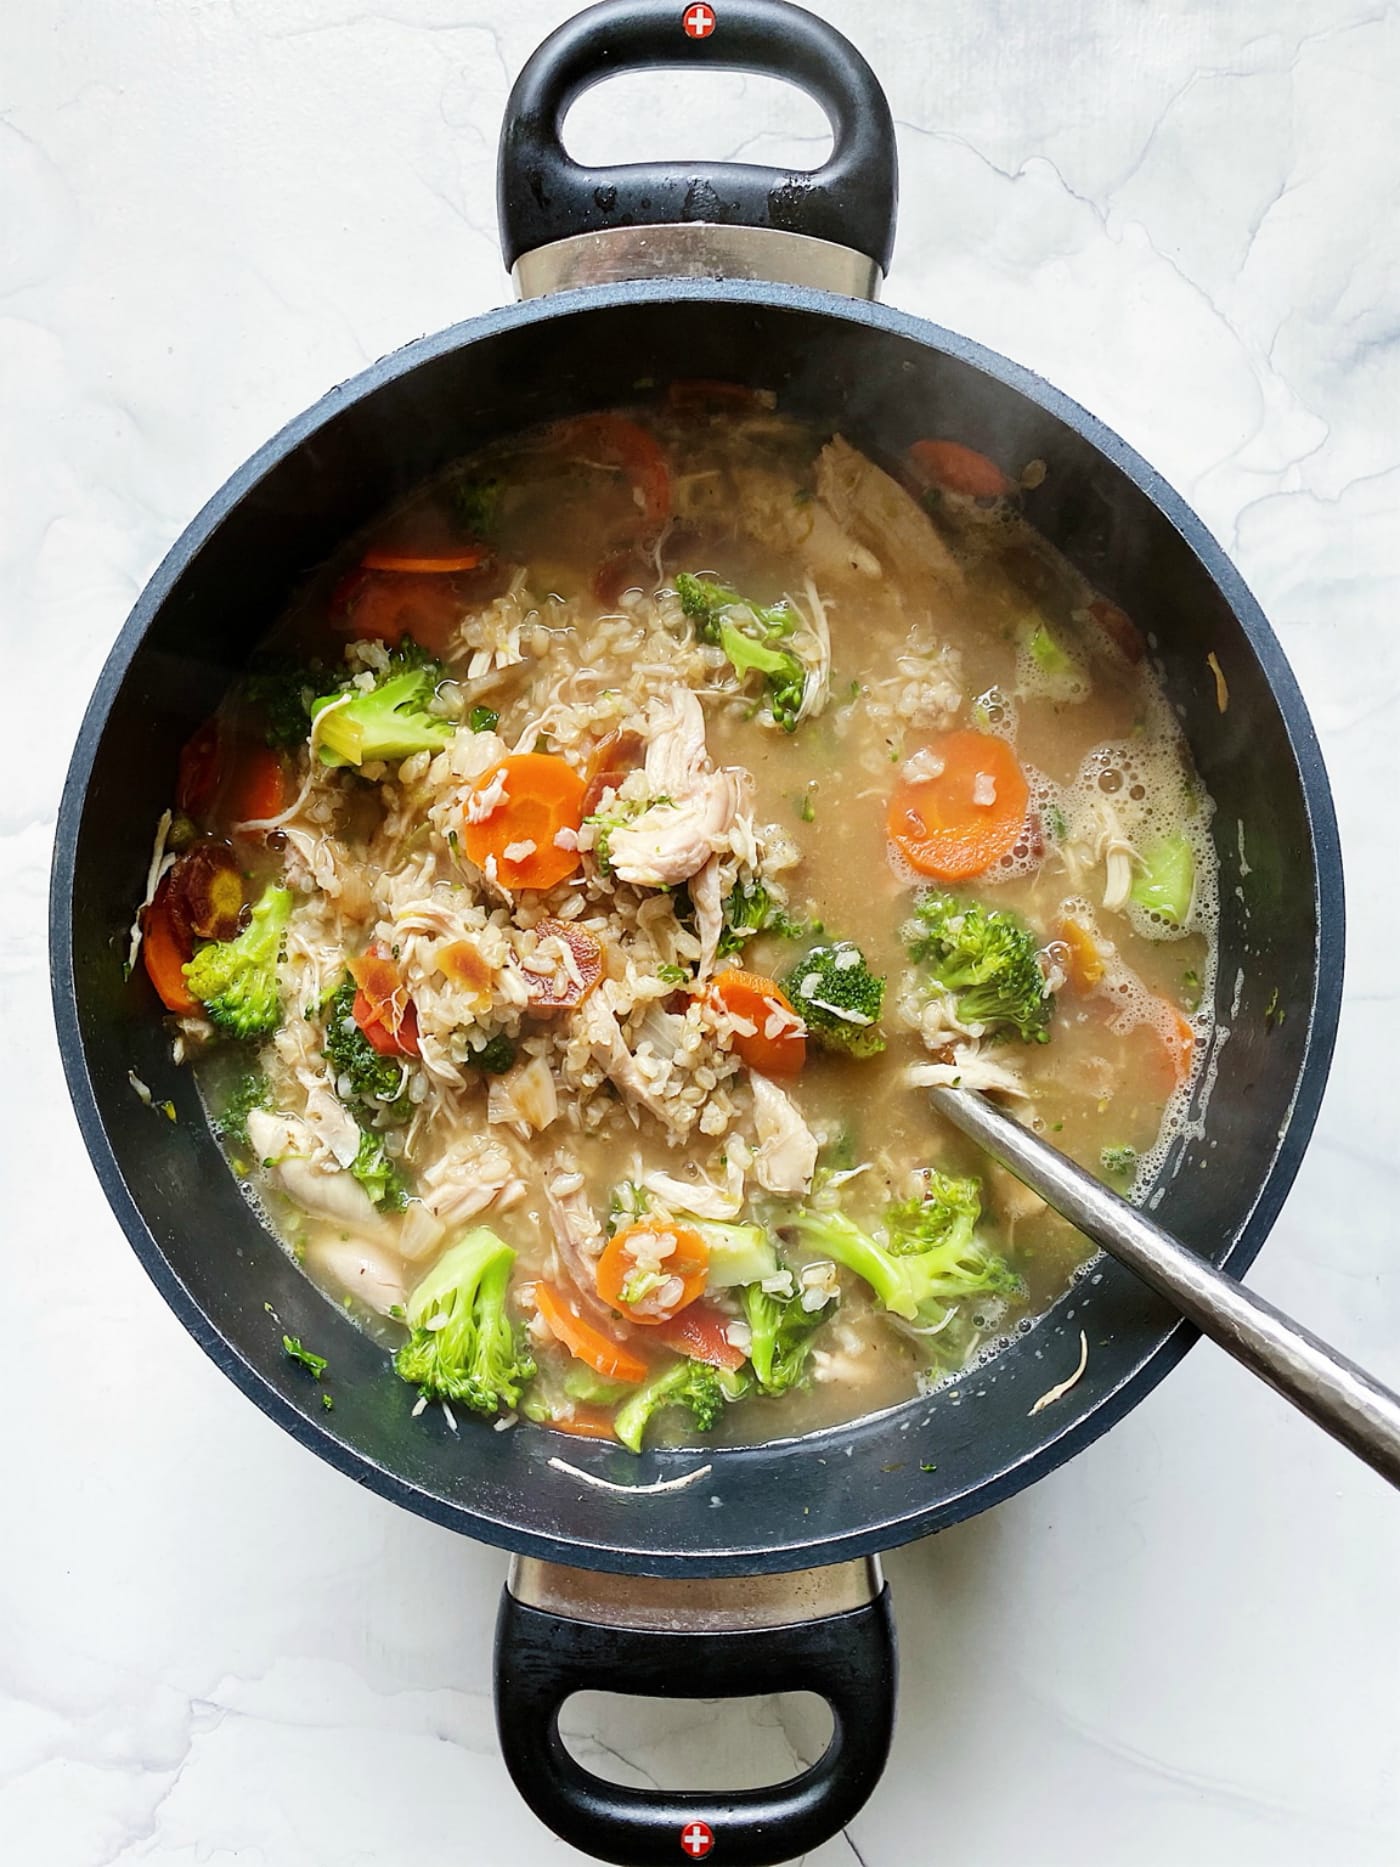 https://reluctantentertainer.com/wp-content/uploads/2020/04/Best-Broccoli-Chicken-Rice-Soup.jpg